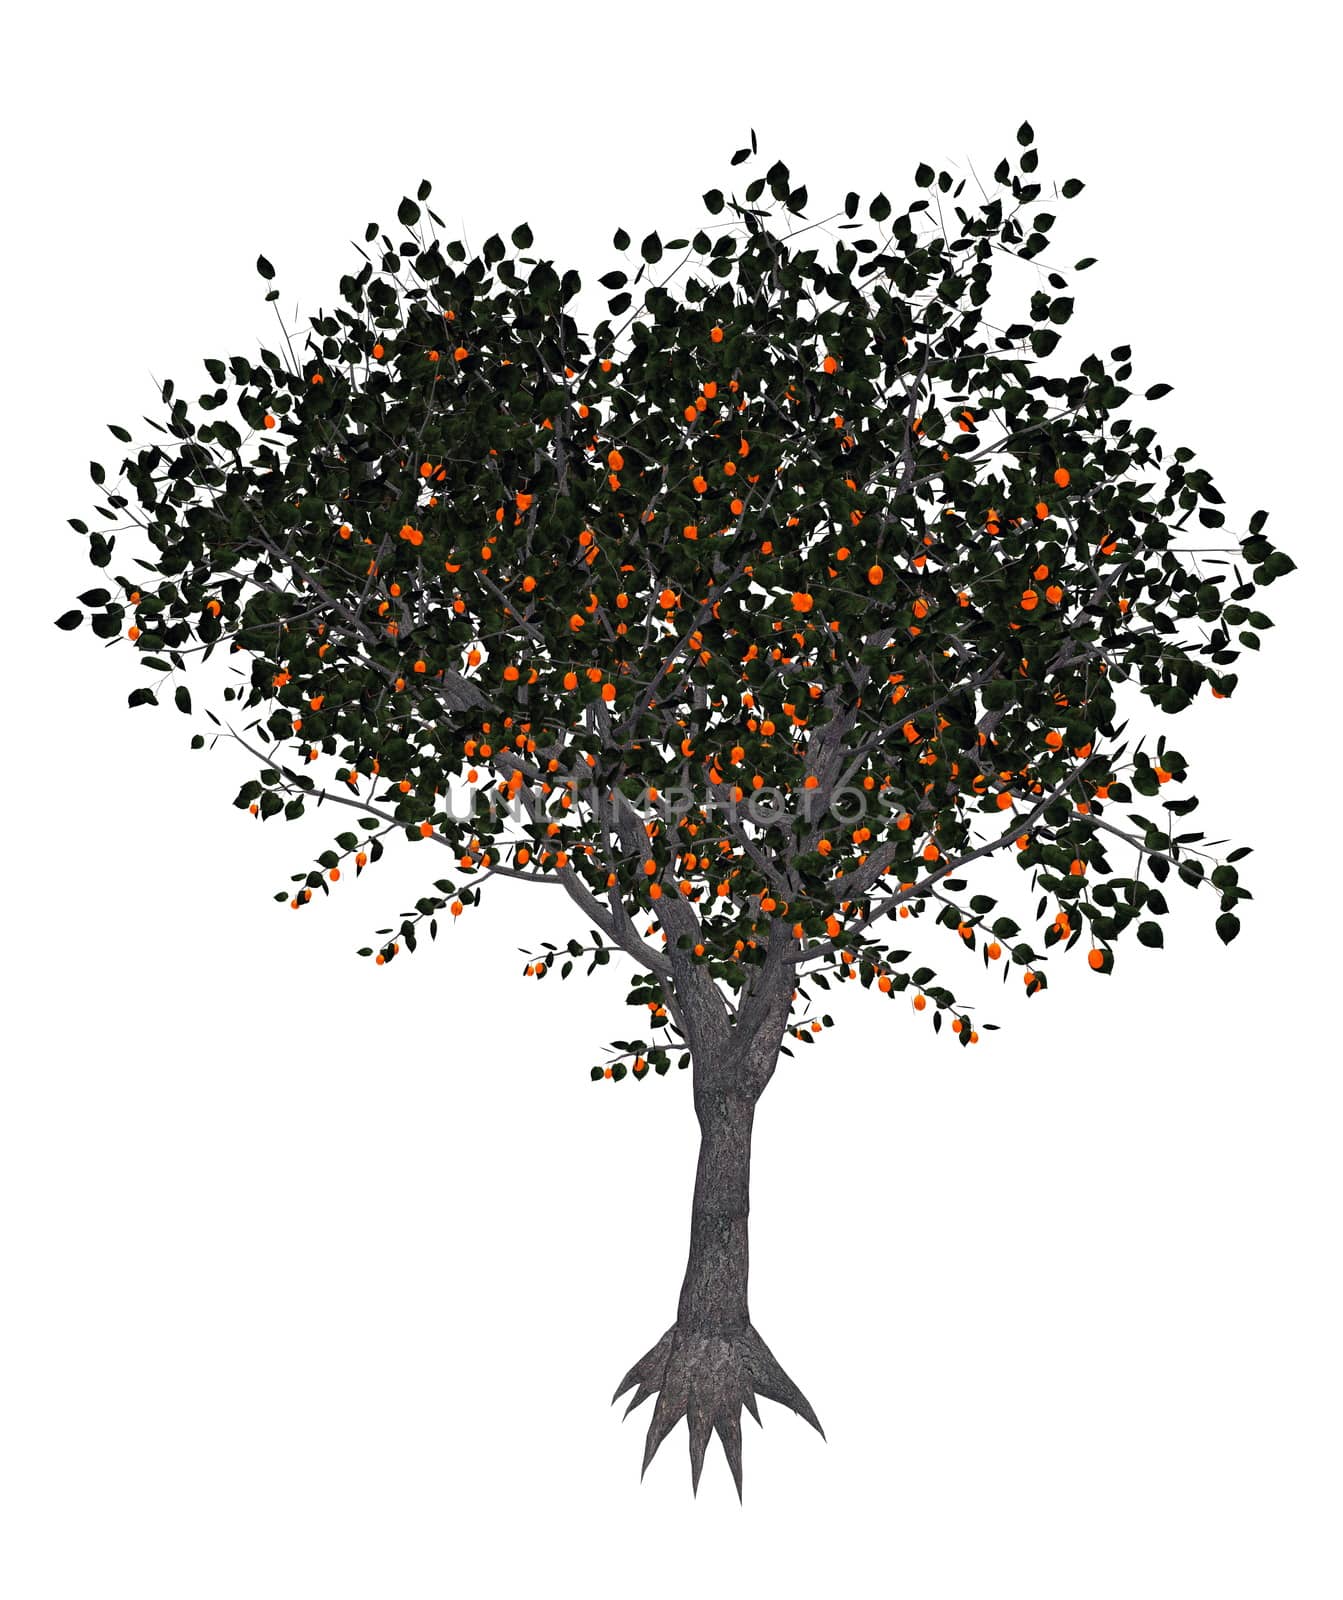 Apricot tree - 3D render by Elenaphotos21